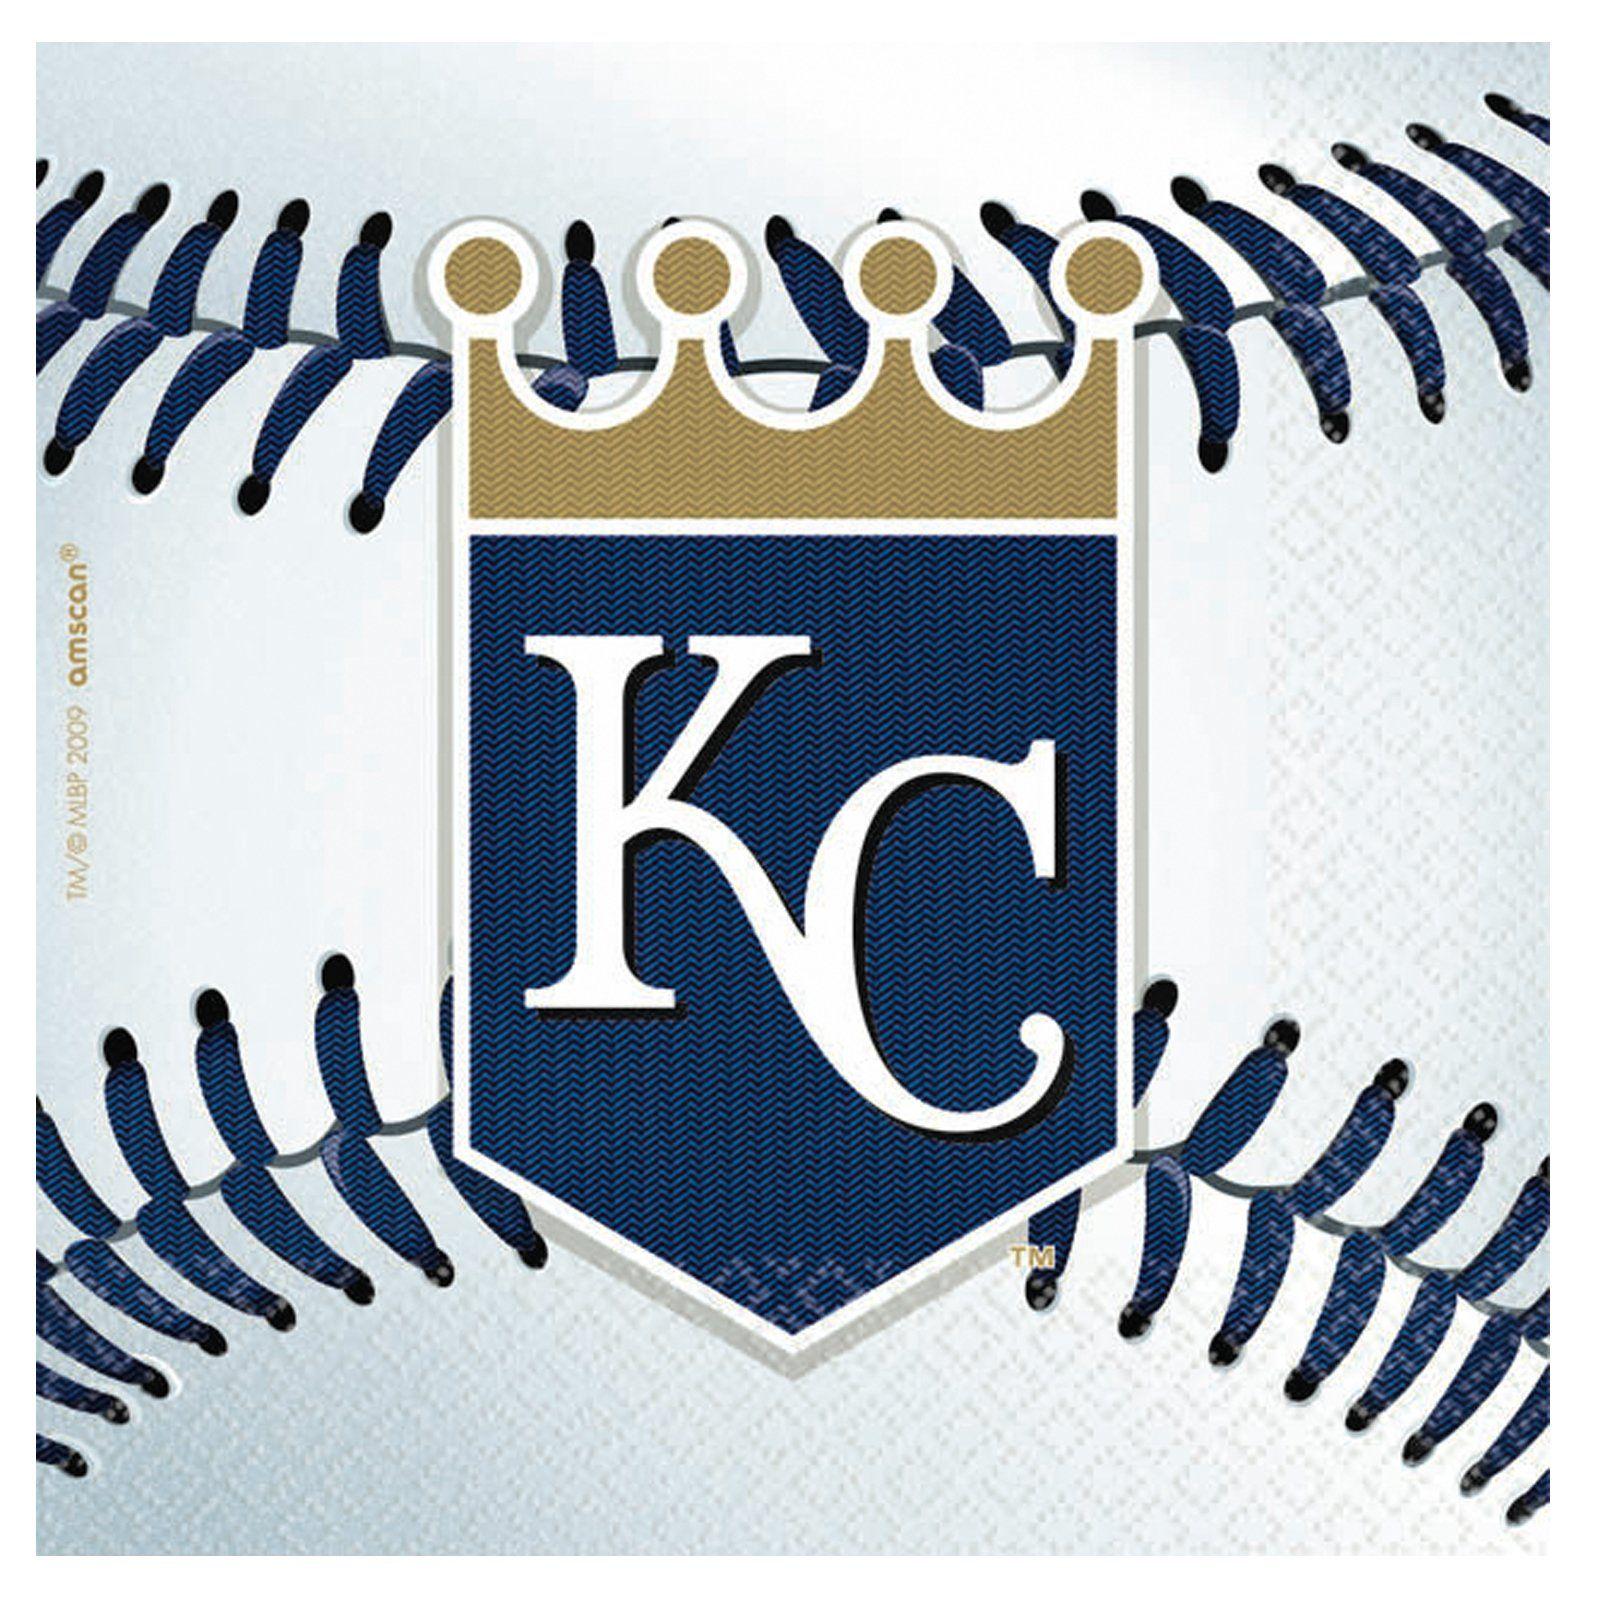 59 Kansas City Royals Wallpaper Pictures